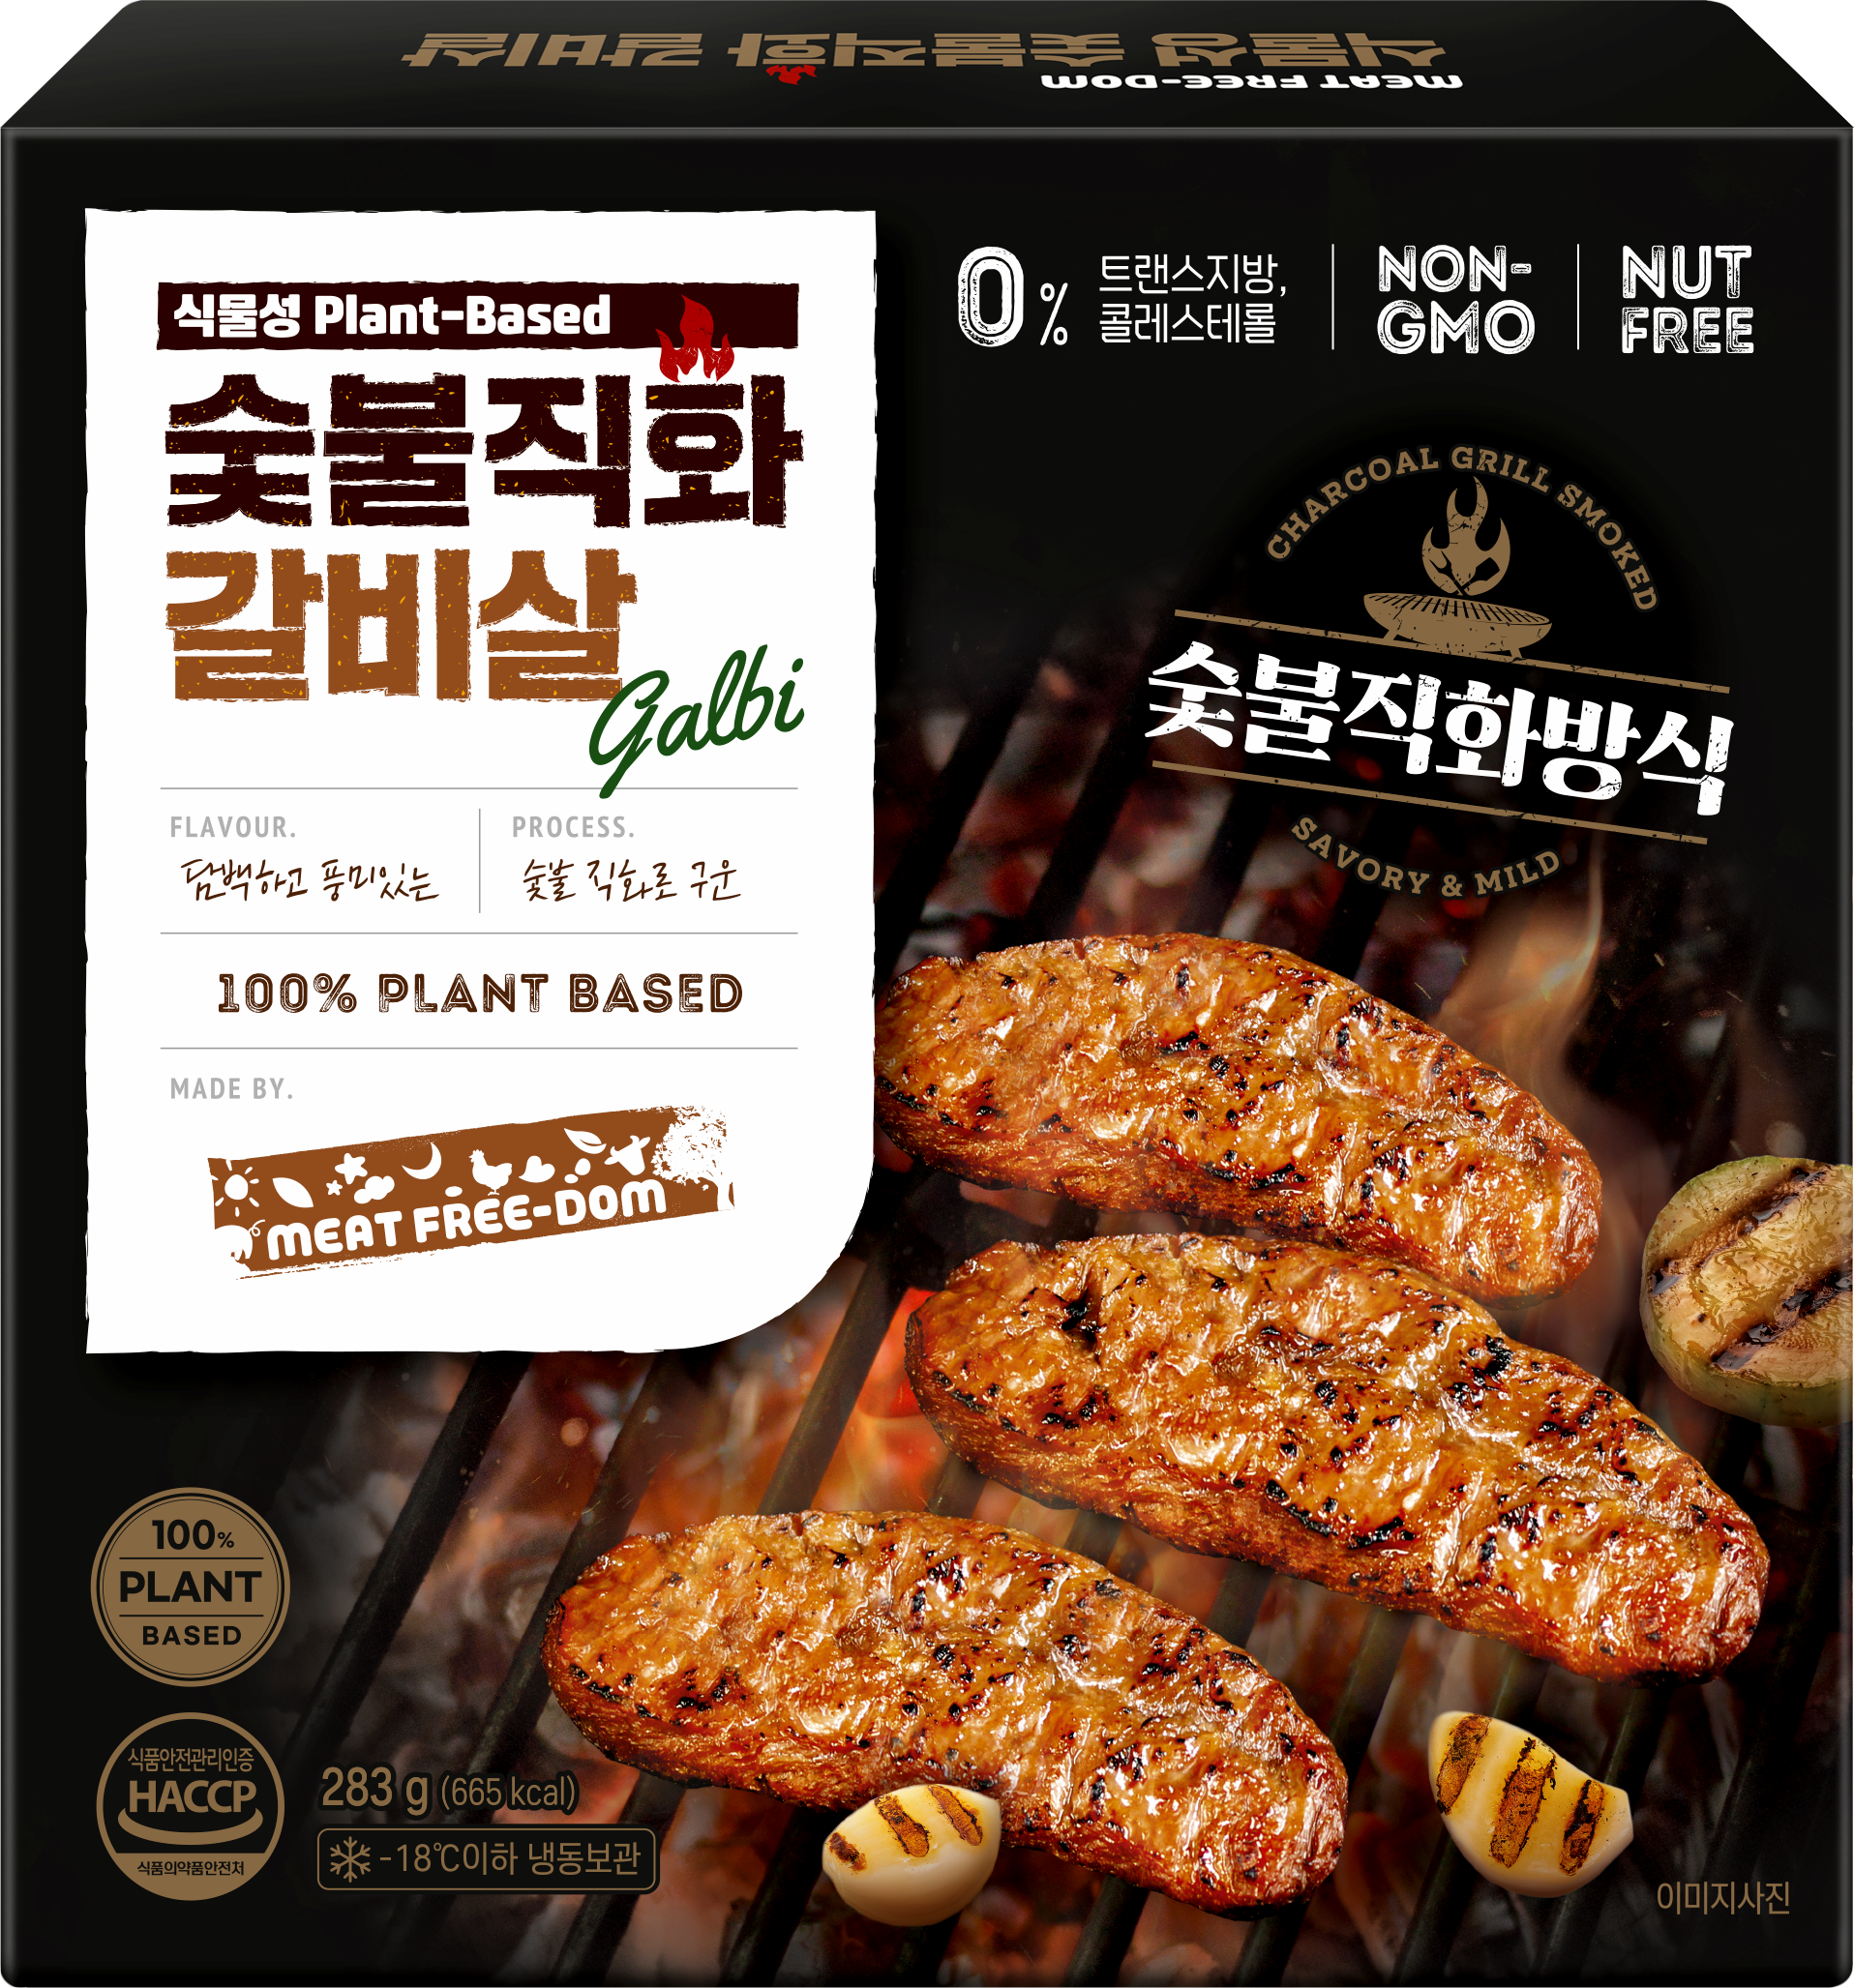 INNOHAS Korea BBQ Flavored Plant Based GAlBI